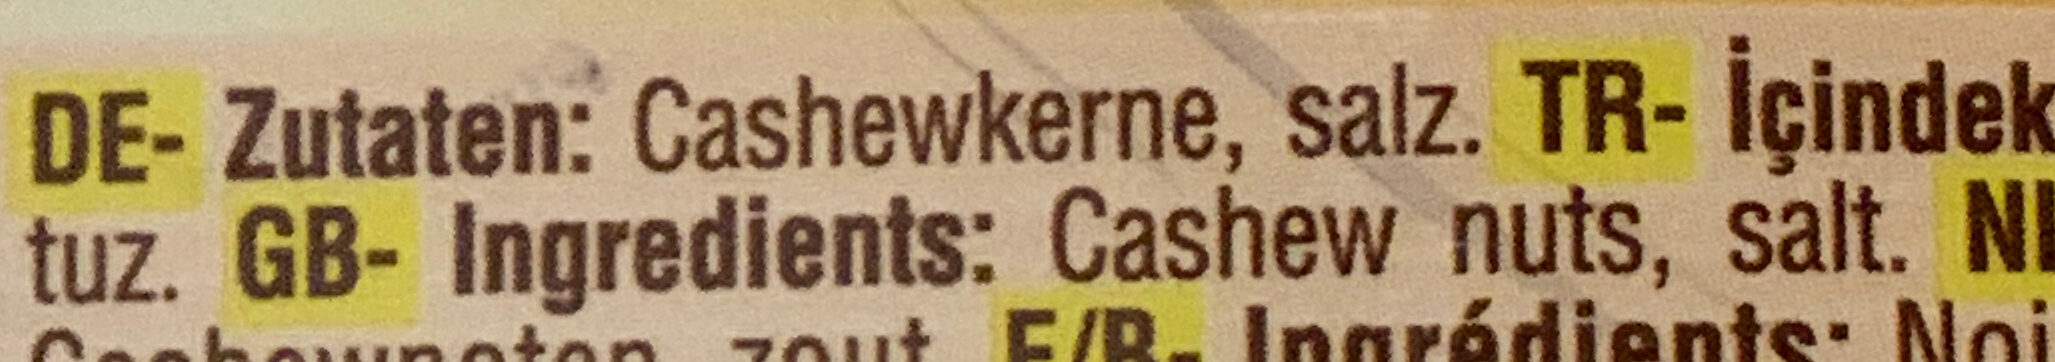 Cashewkerne - Ingredients